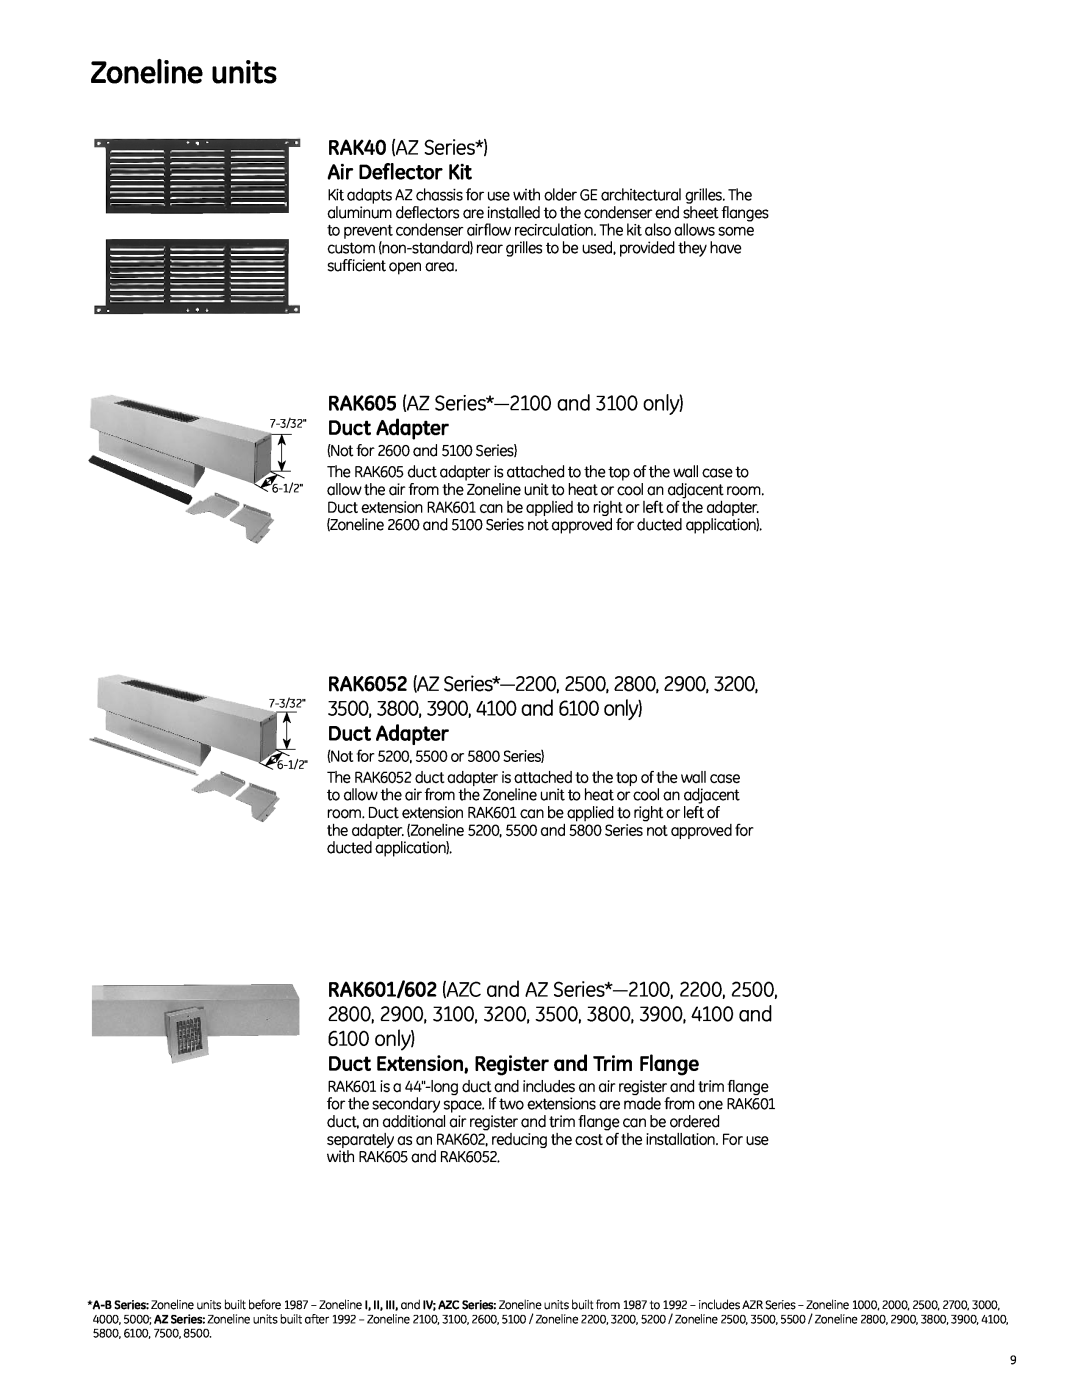 GE 2010 manual RAK40 AZ Series, Air Deflector Kit, RAK605 AZ Series*-2100and 3100 only, Duct Adapter, Zoneline units 